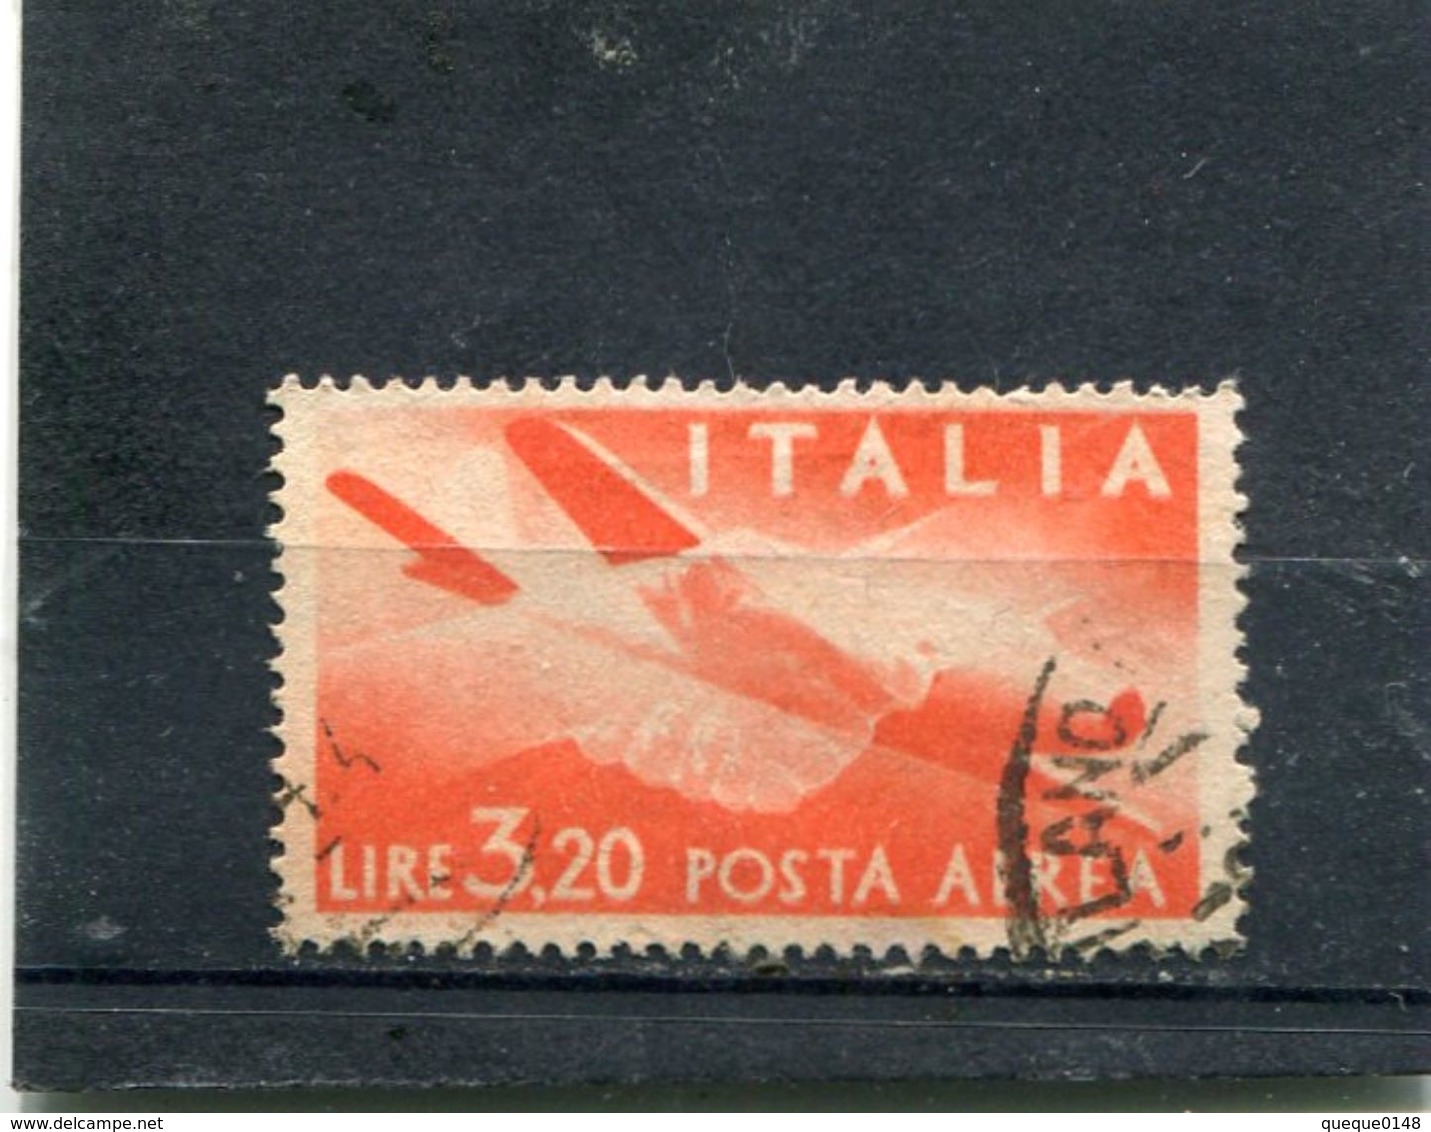 ITALY. 1945. SCOTT C108. PLANE AND CLASPED HANDS - Luftpost